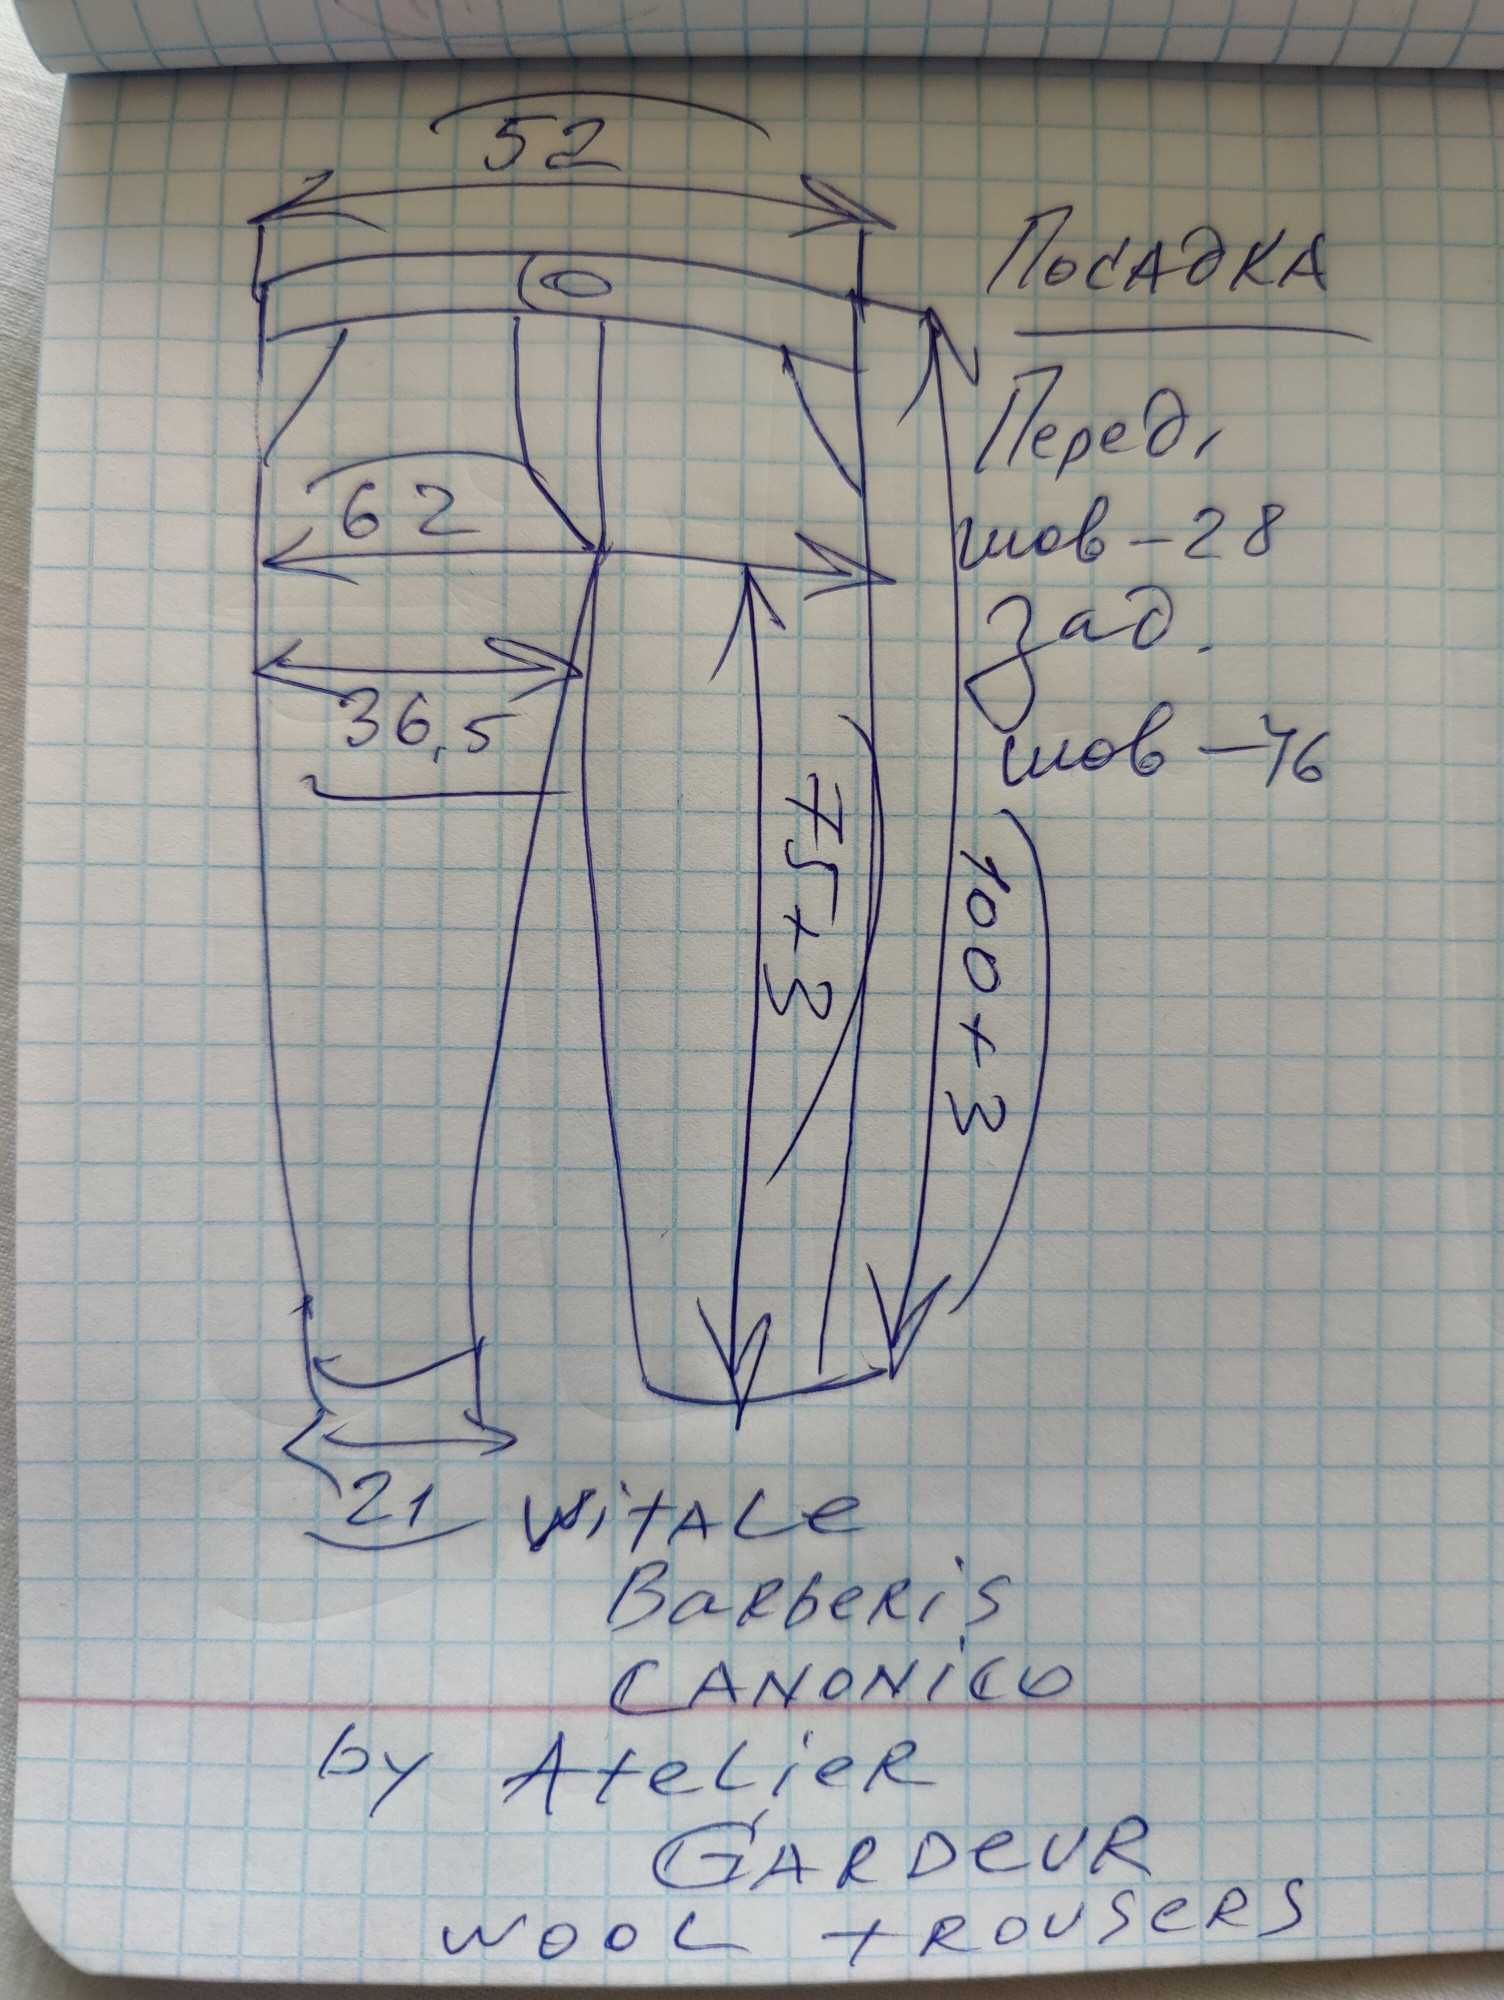 Джинсы брюки шерсть Vitale Barberis Canonico w 40-42 midnight blue.